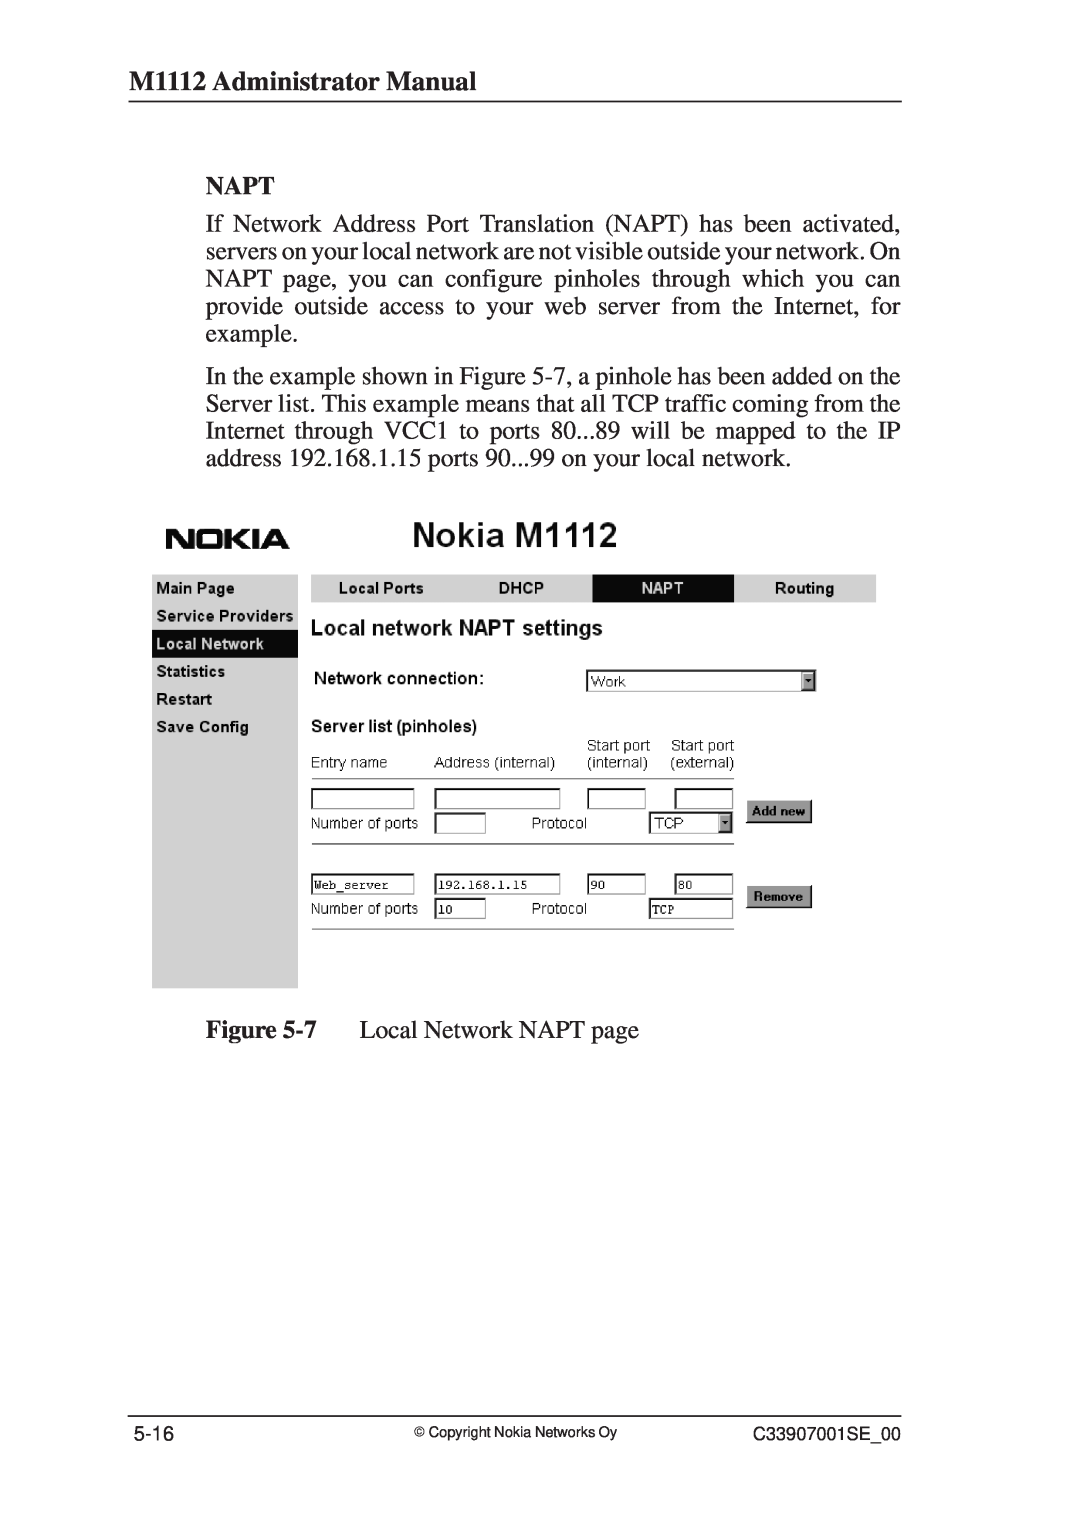 Nokia manual M1112 Administrator Manual, Napt 